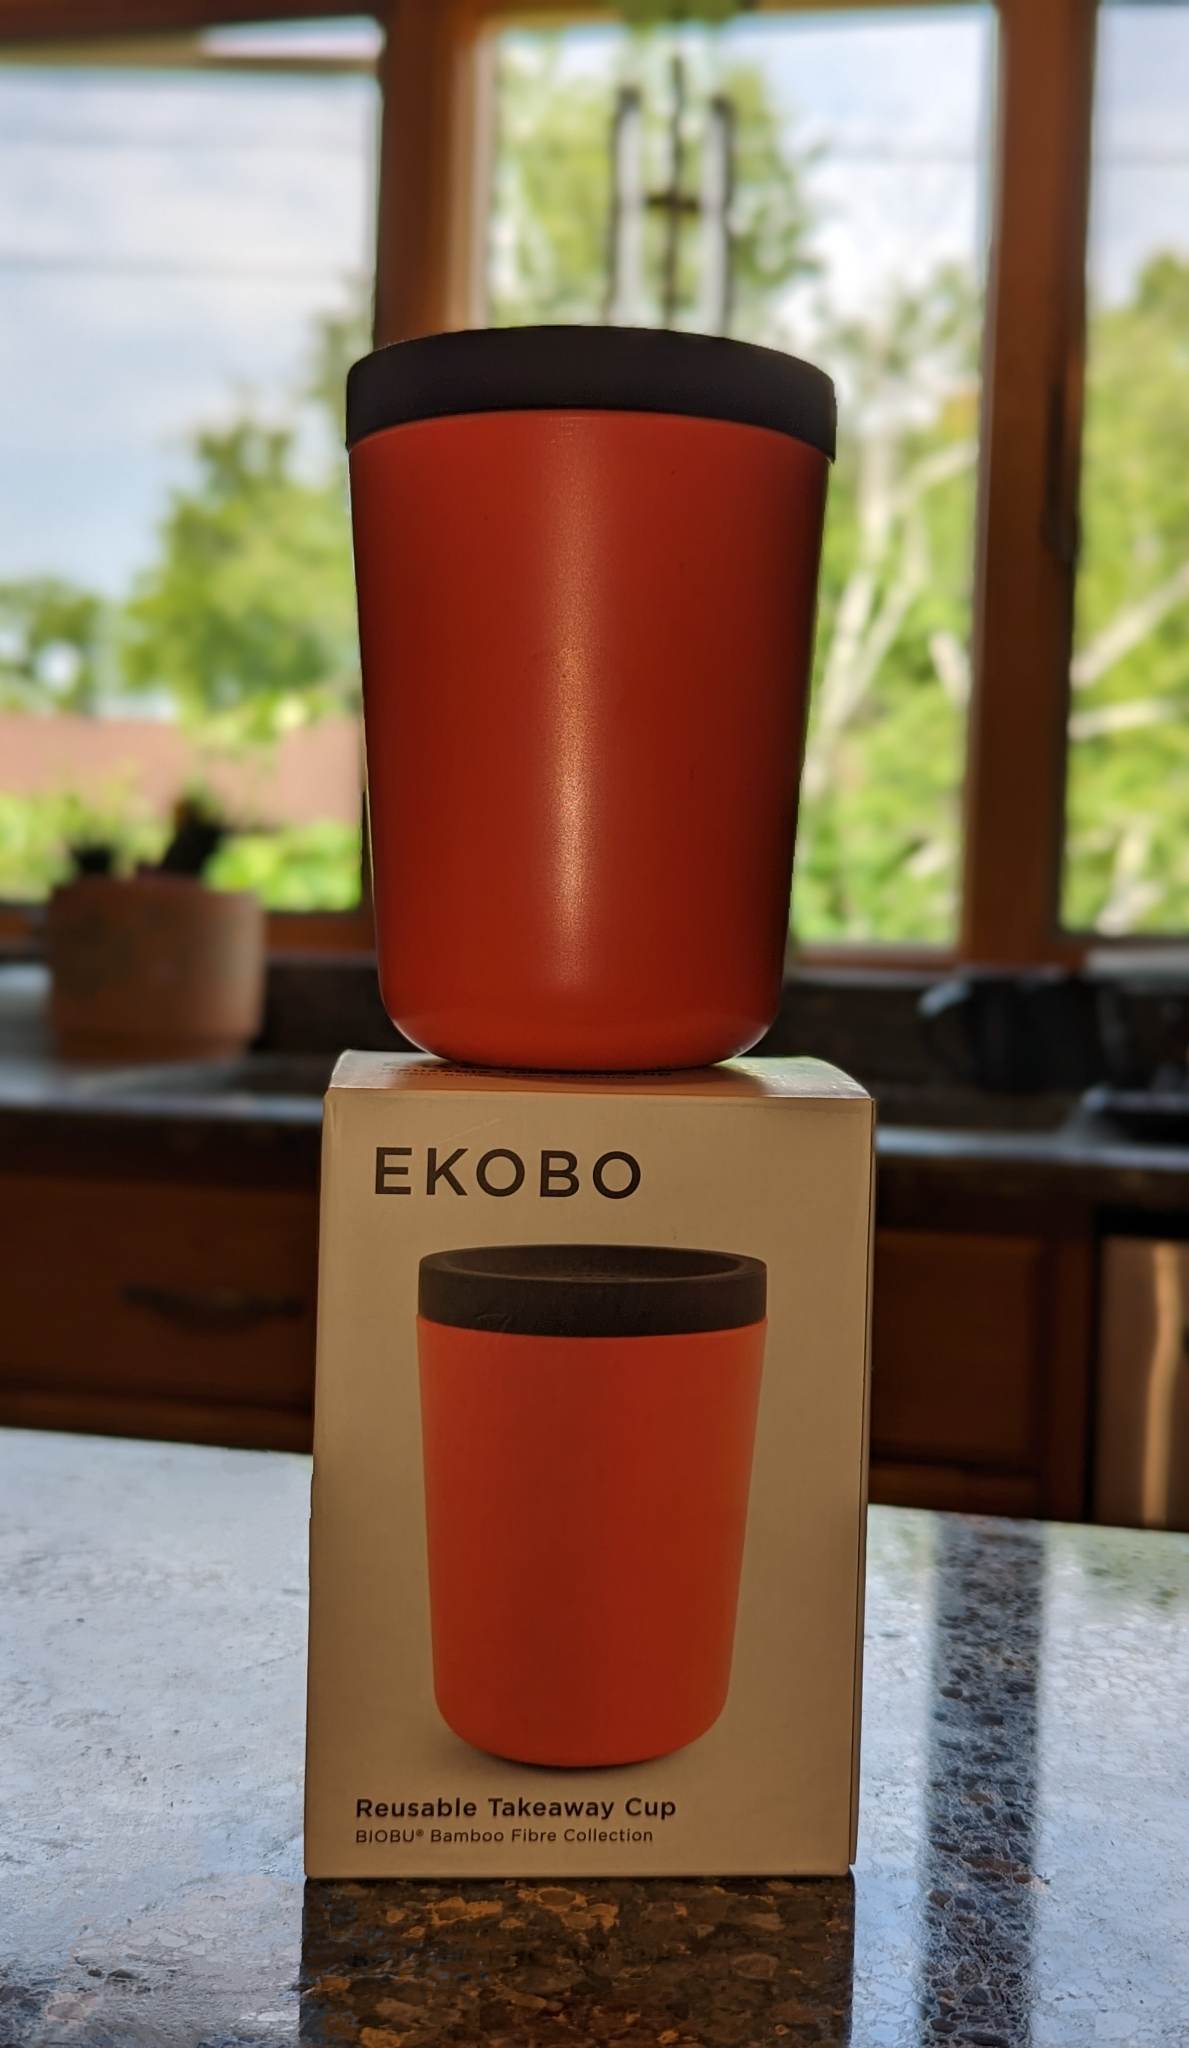 Ekobo Reusable Coffee Cup (12oz)